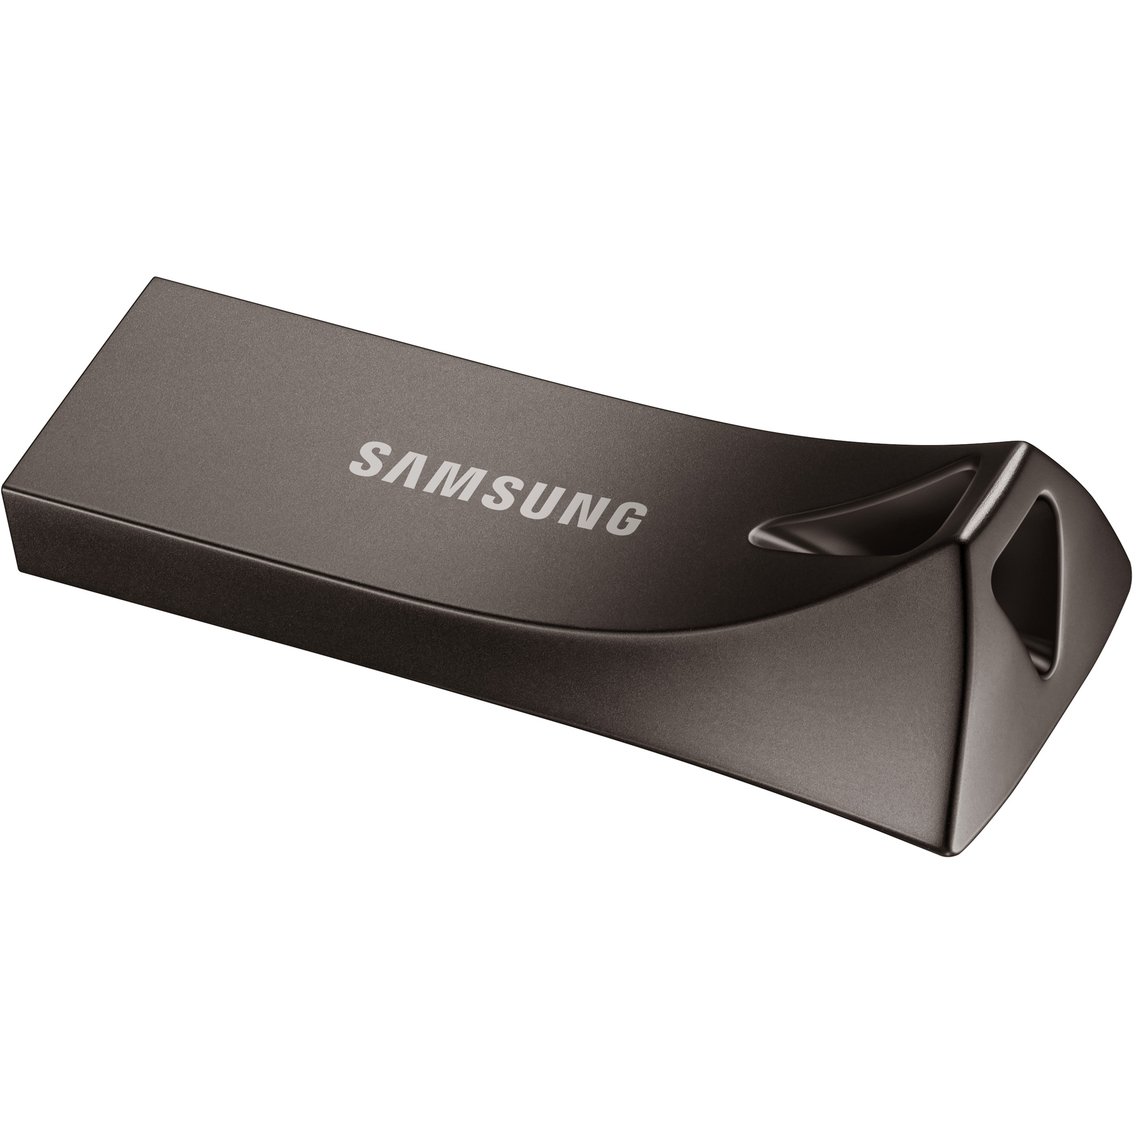 Samsung BAR Plus 256GB USB 3.1 Flash Drive - Image 2 of 3